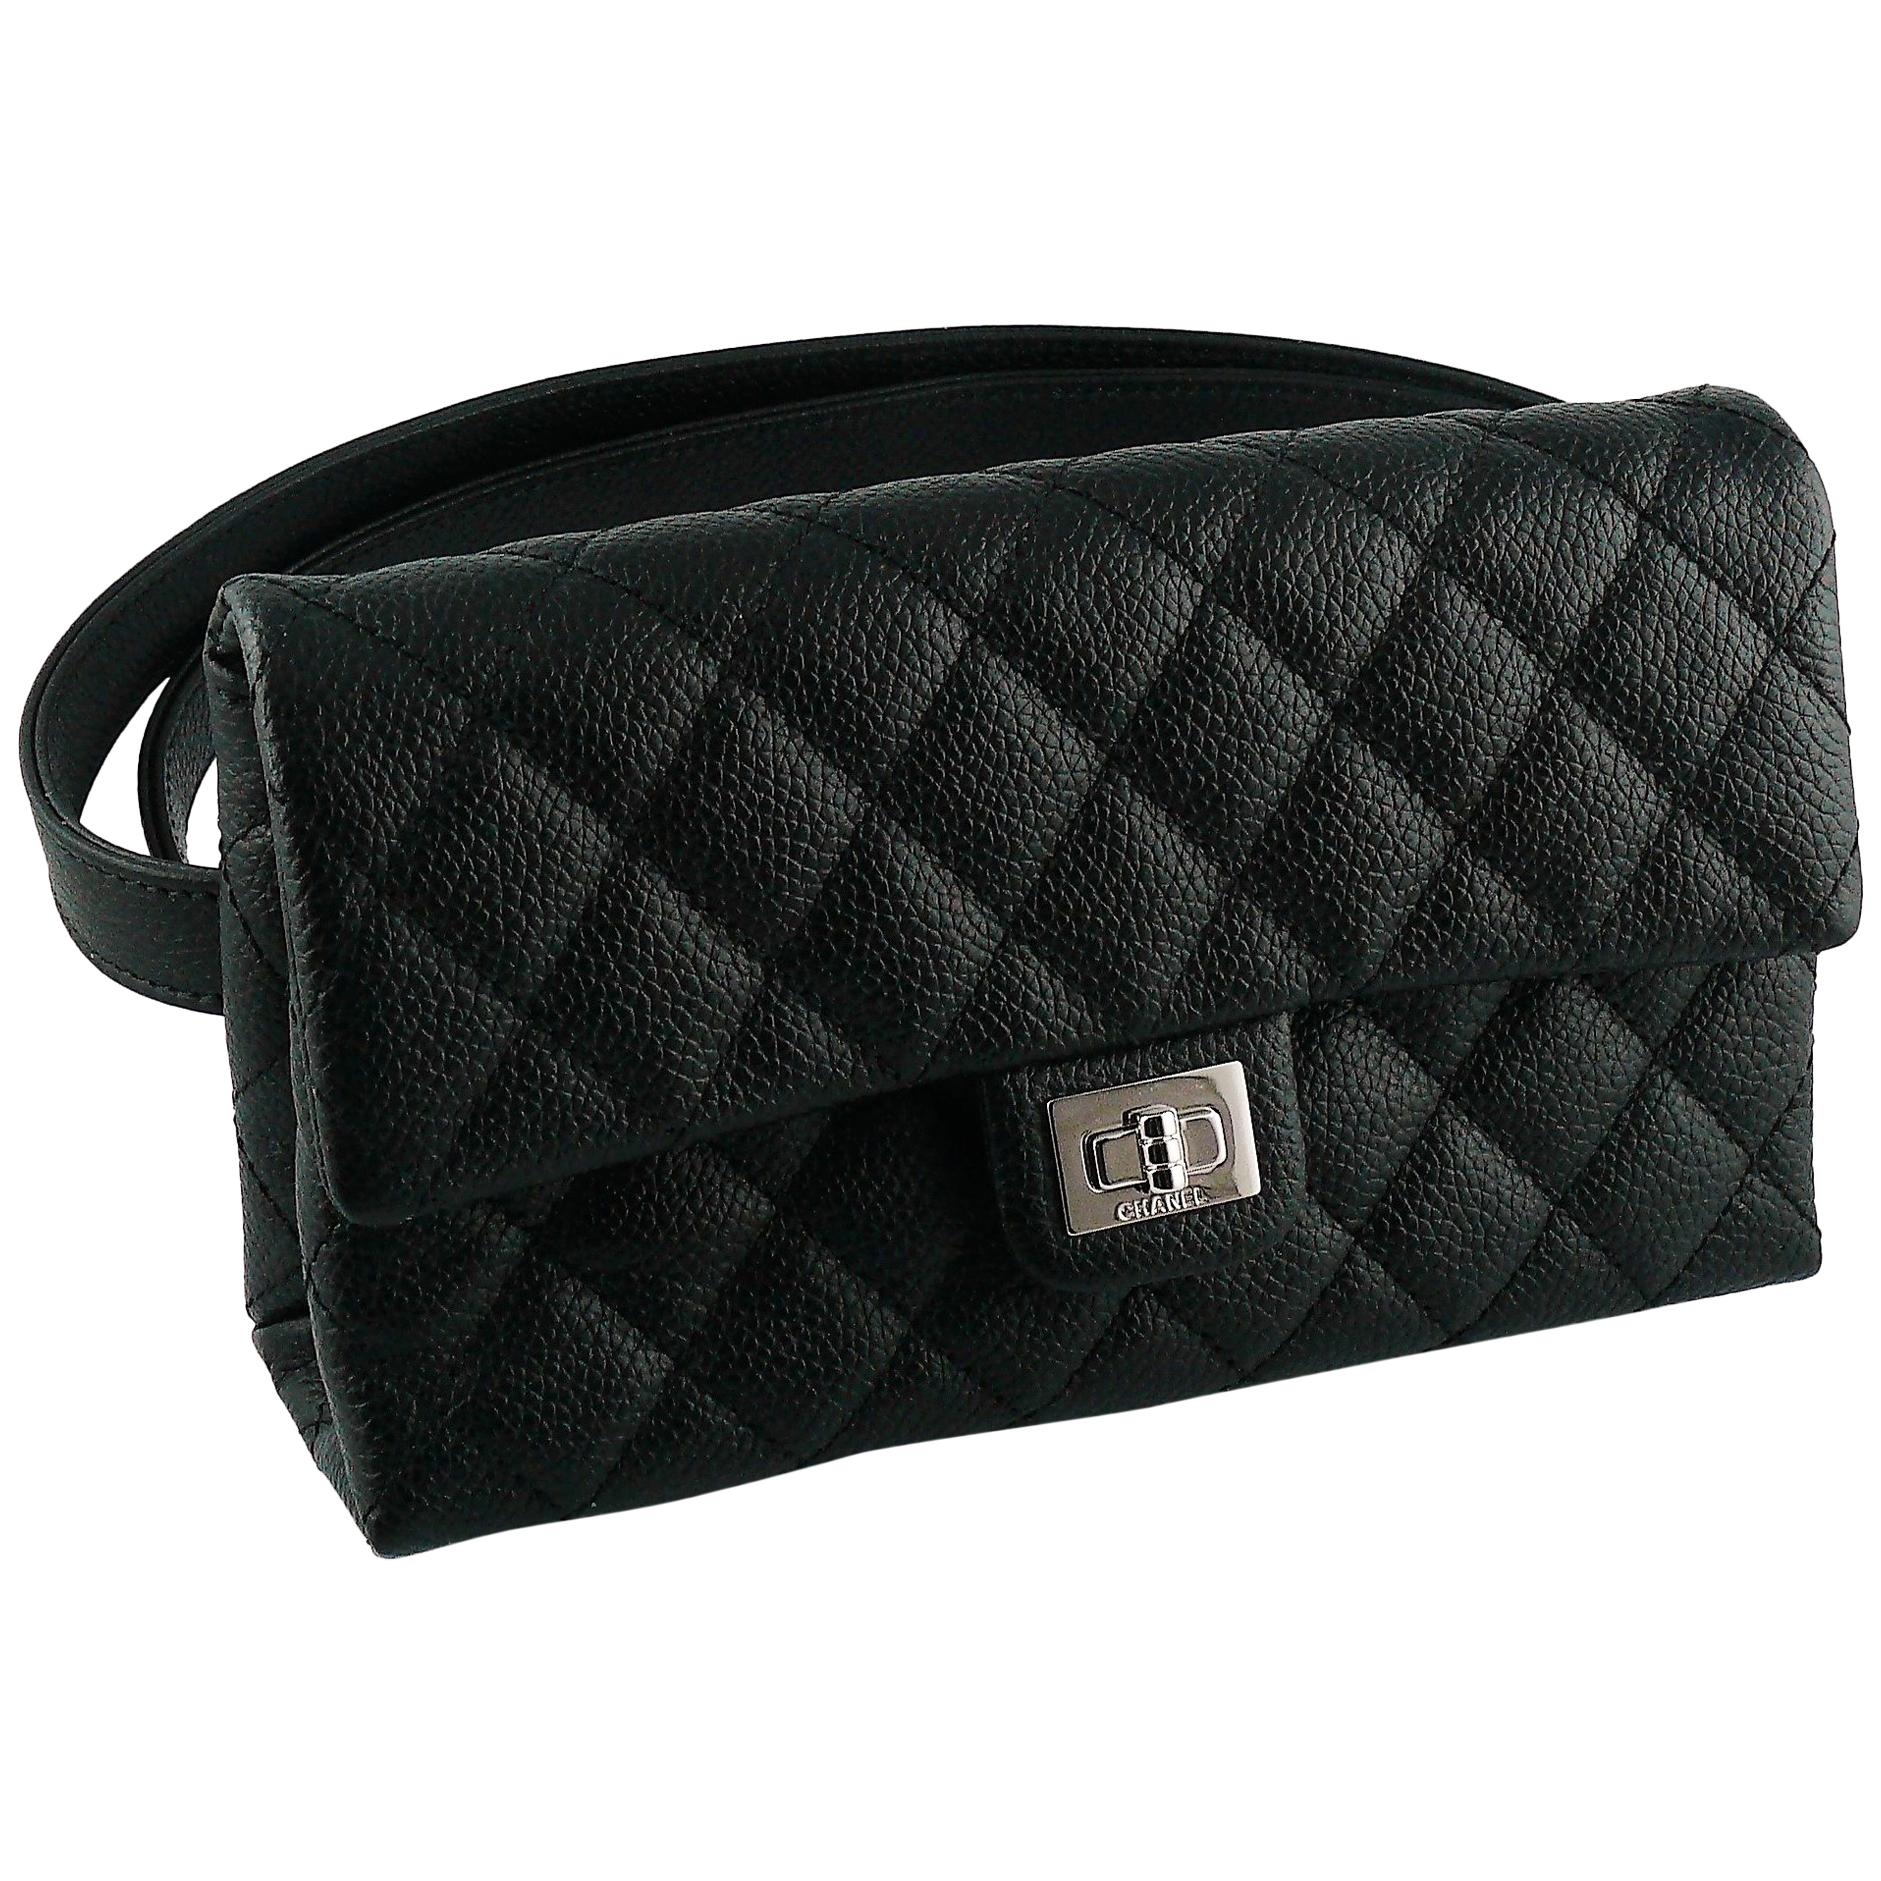 Chanel Uniform Black Quilted Grained Leather Waist-Belt Bag